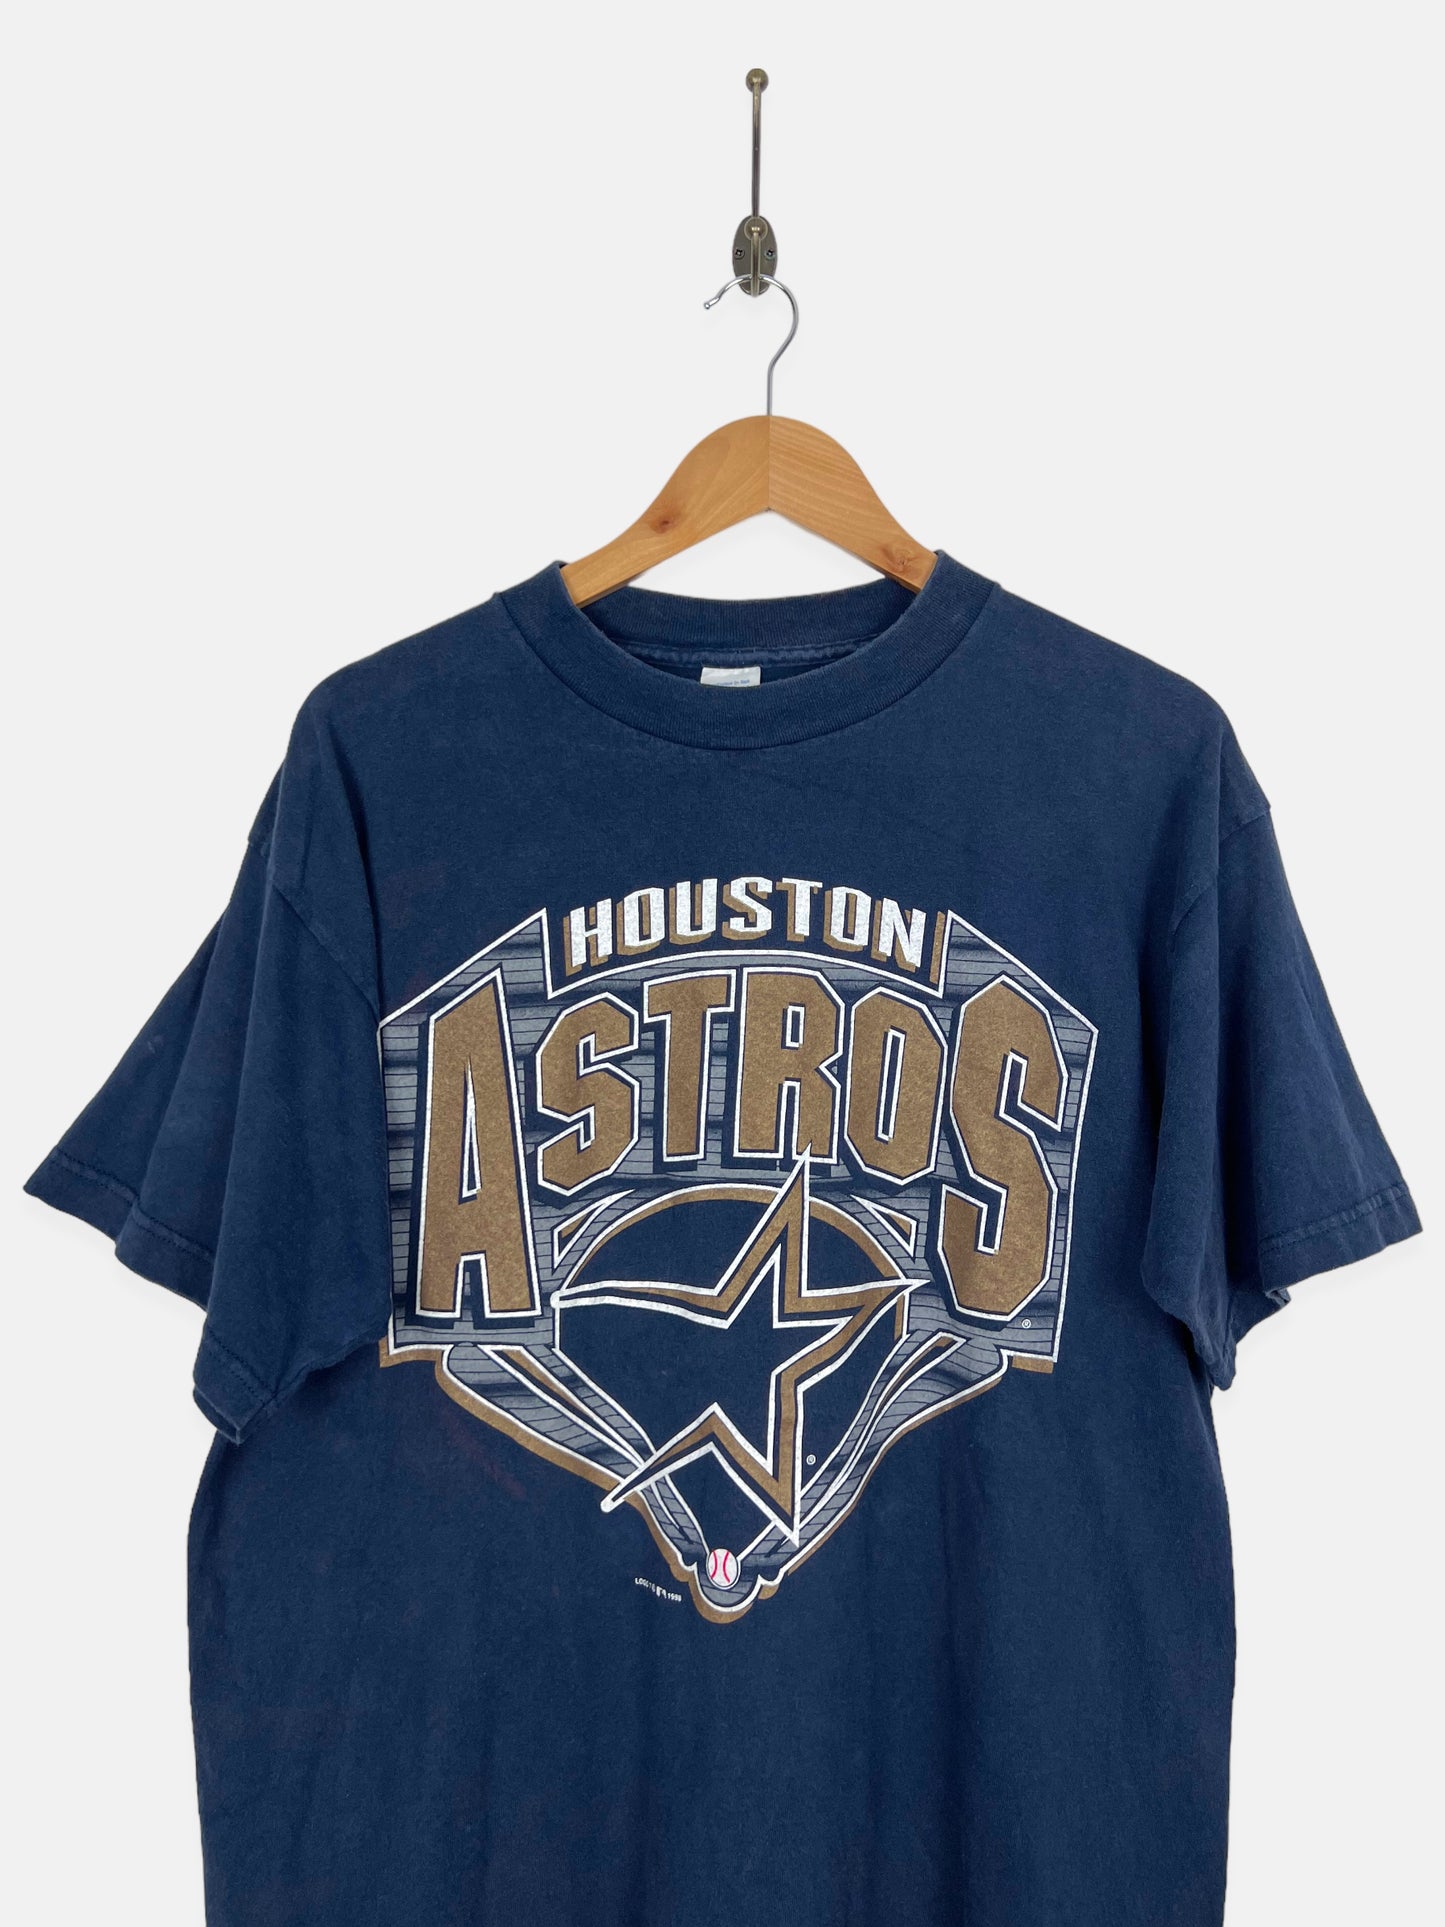 1998 Houston Astros MLB Vintage T-Shirt Size M-L